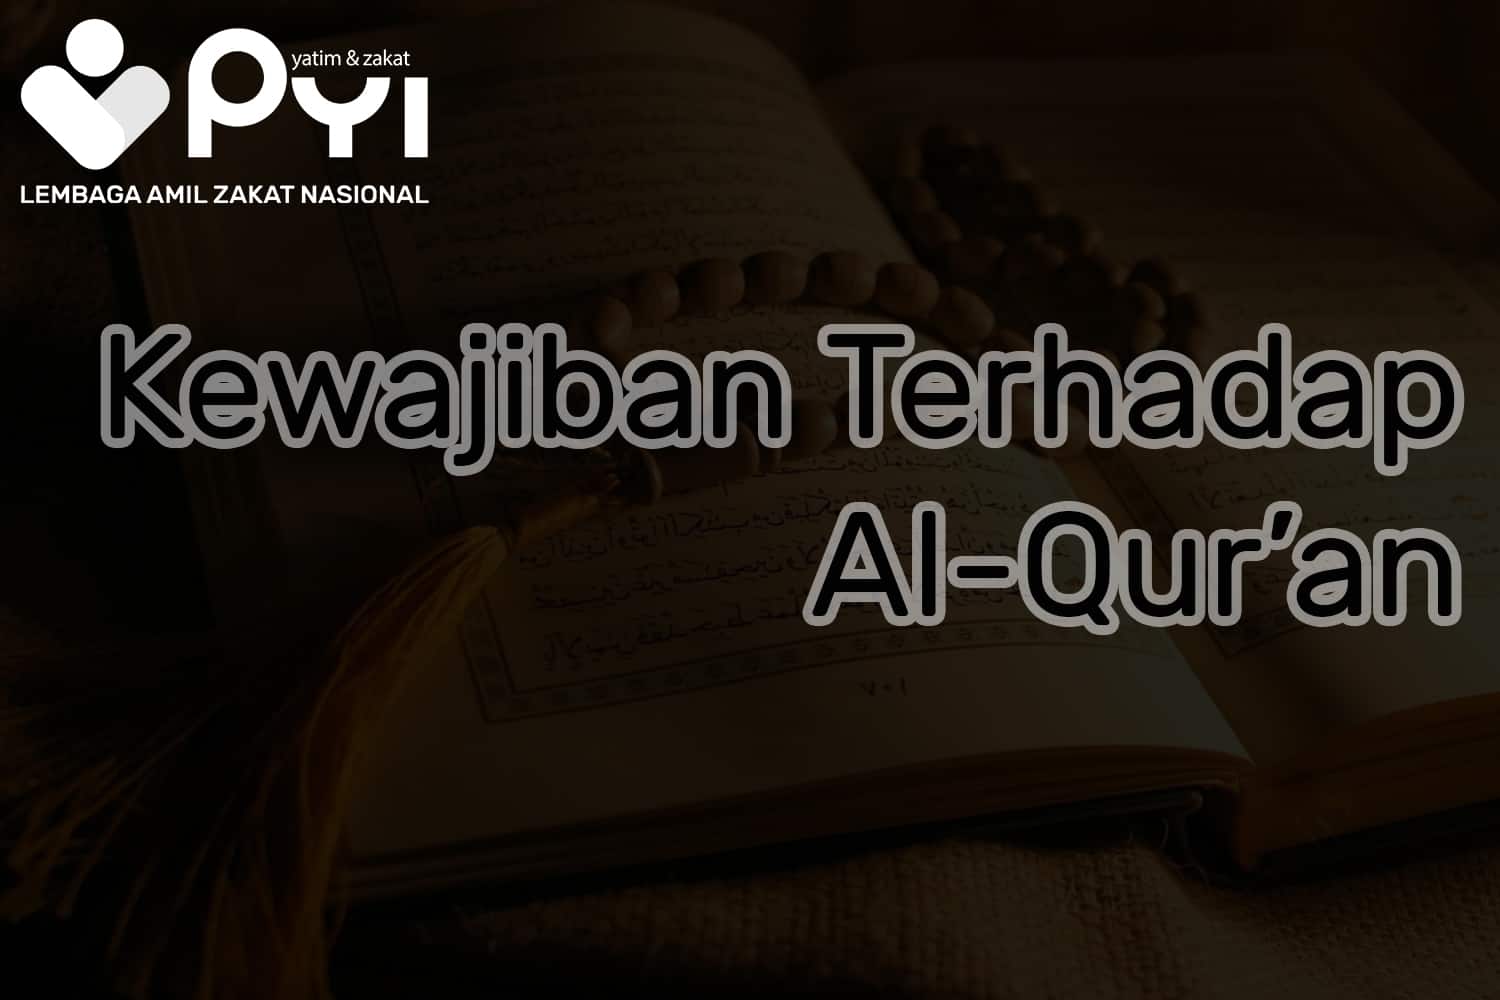 Kewajiban Terhadap Al-Qur'an